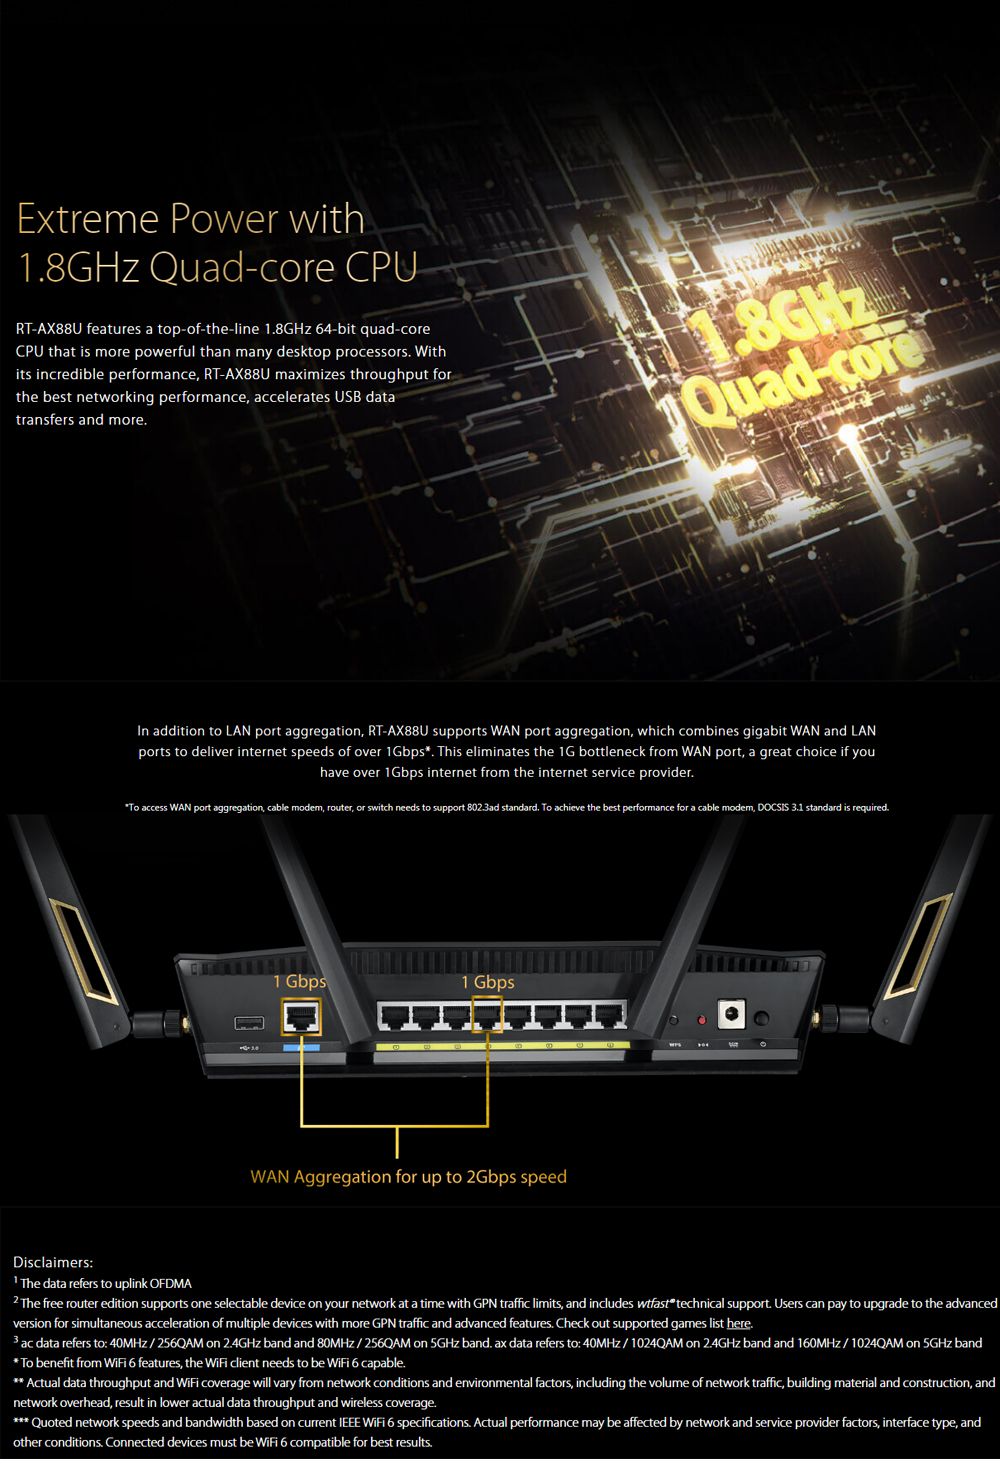 ASUS-RT-AX88U-WiFi-6-Router-AX6000-Dual-Band-MU-MIMO-OFDMA-WiFi-Router-6000Mbps-IPv6-Quad-Core-1750268